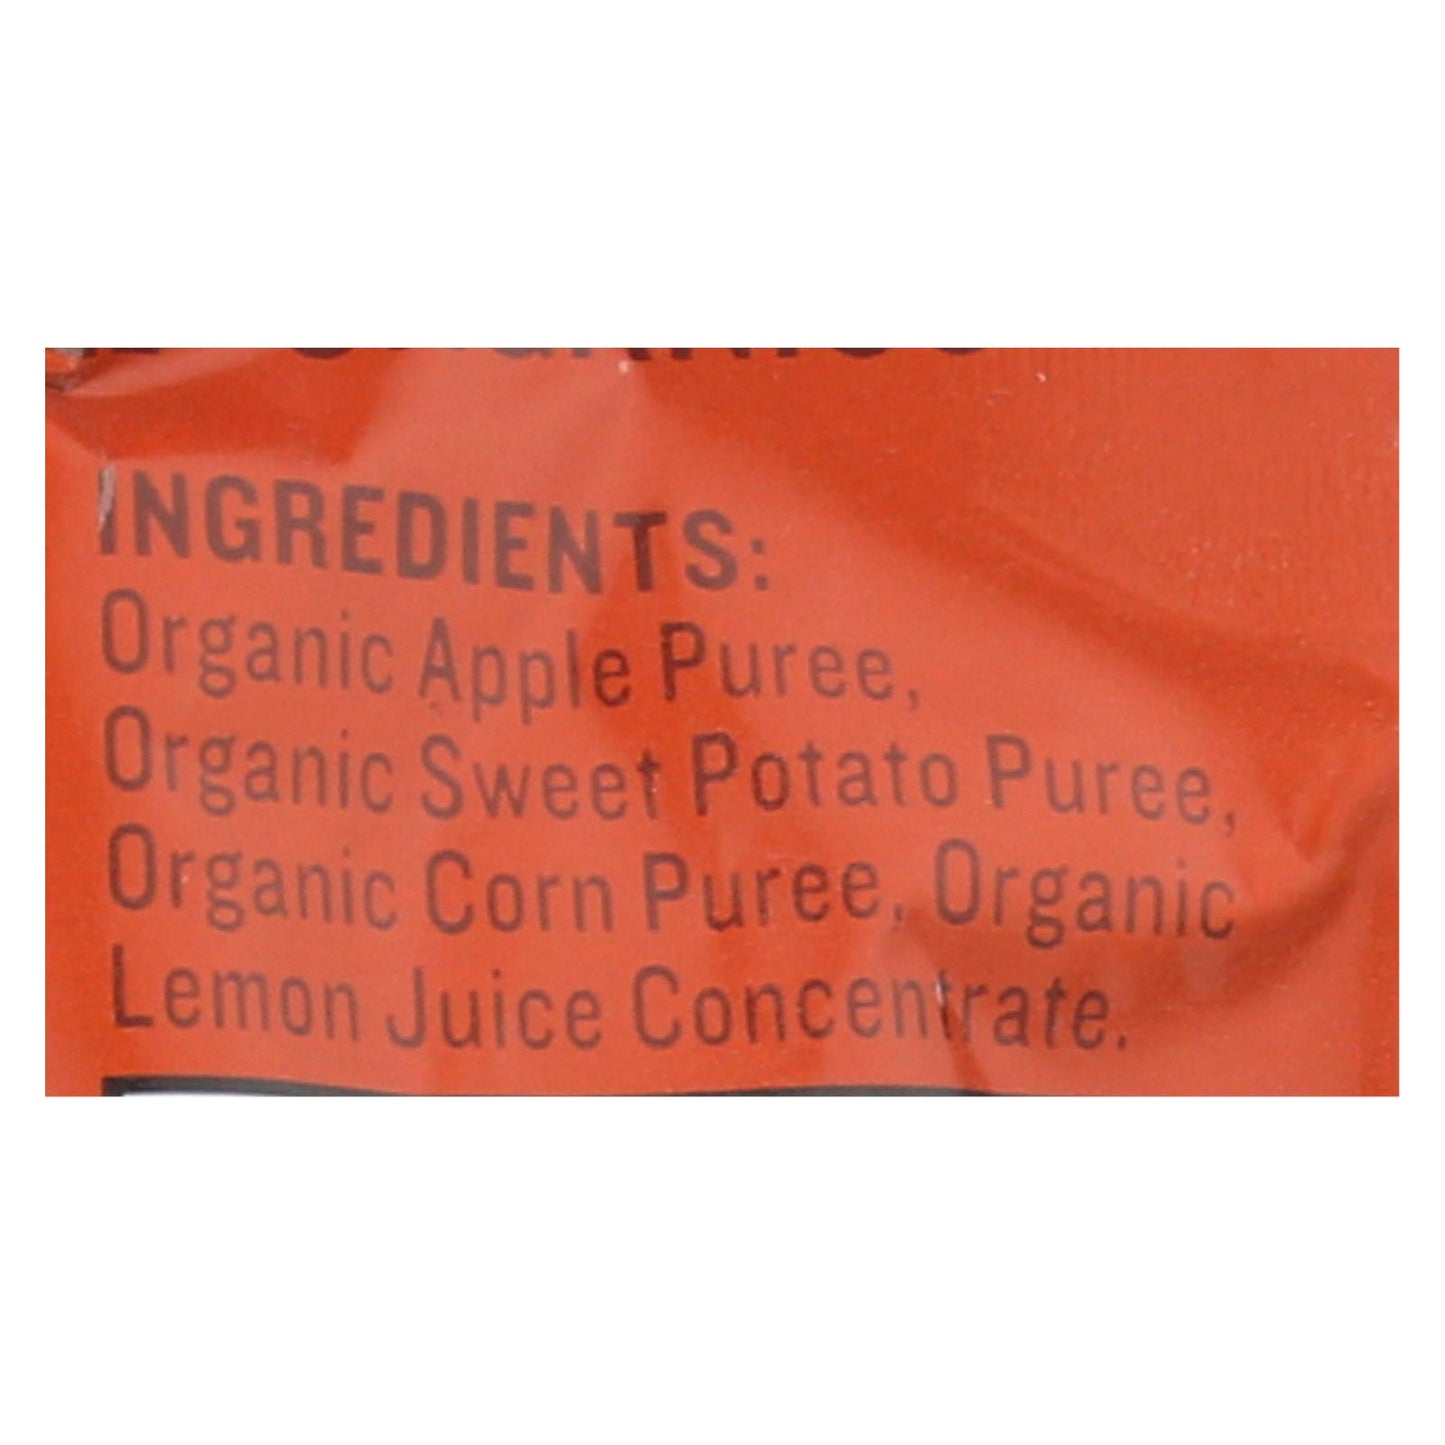 Peter Rabbit Organics Veggie Snacks - Sweet Potato Corn And Apple - Case Of 10 - 4.4 Oz.